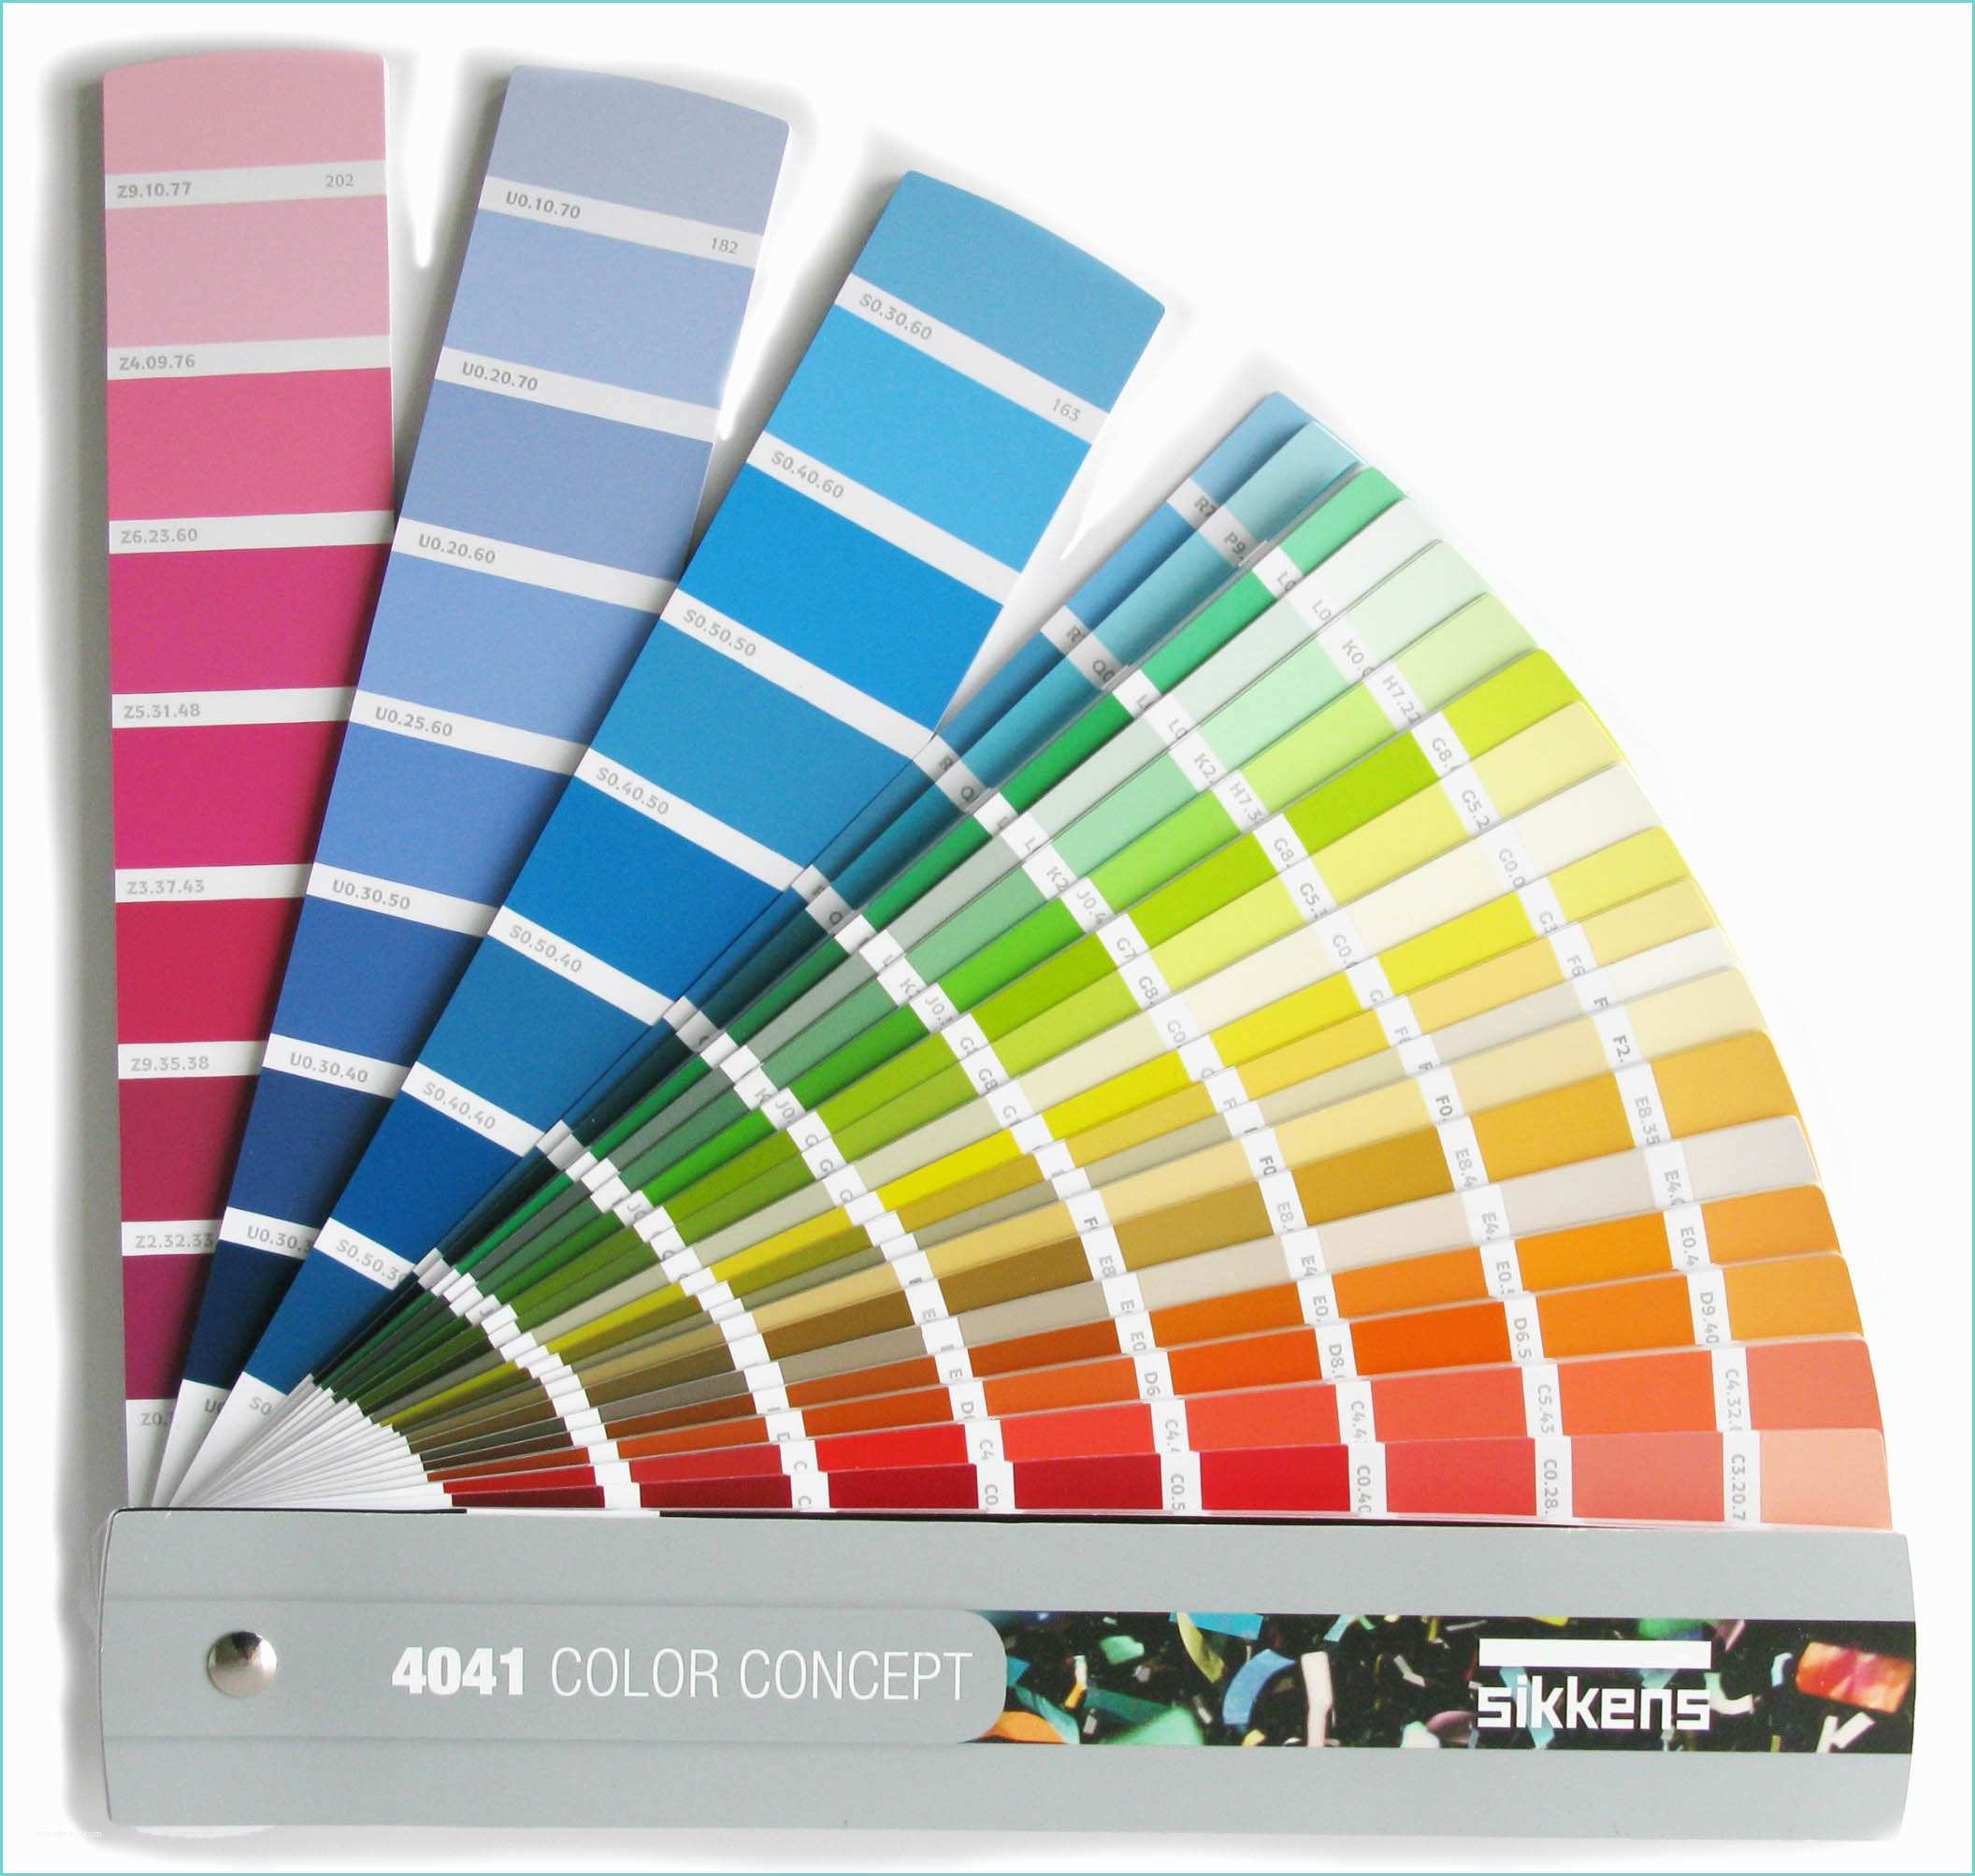 Sikkens палитра цветов 4041 Color Concept